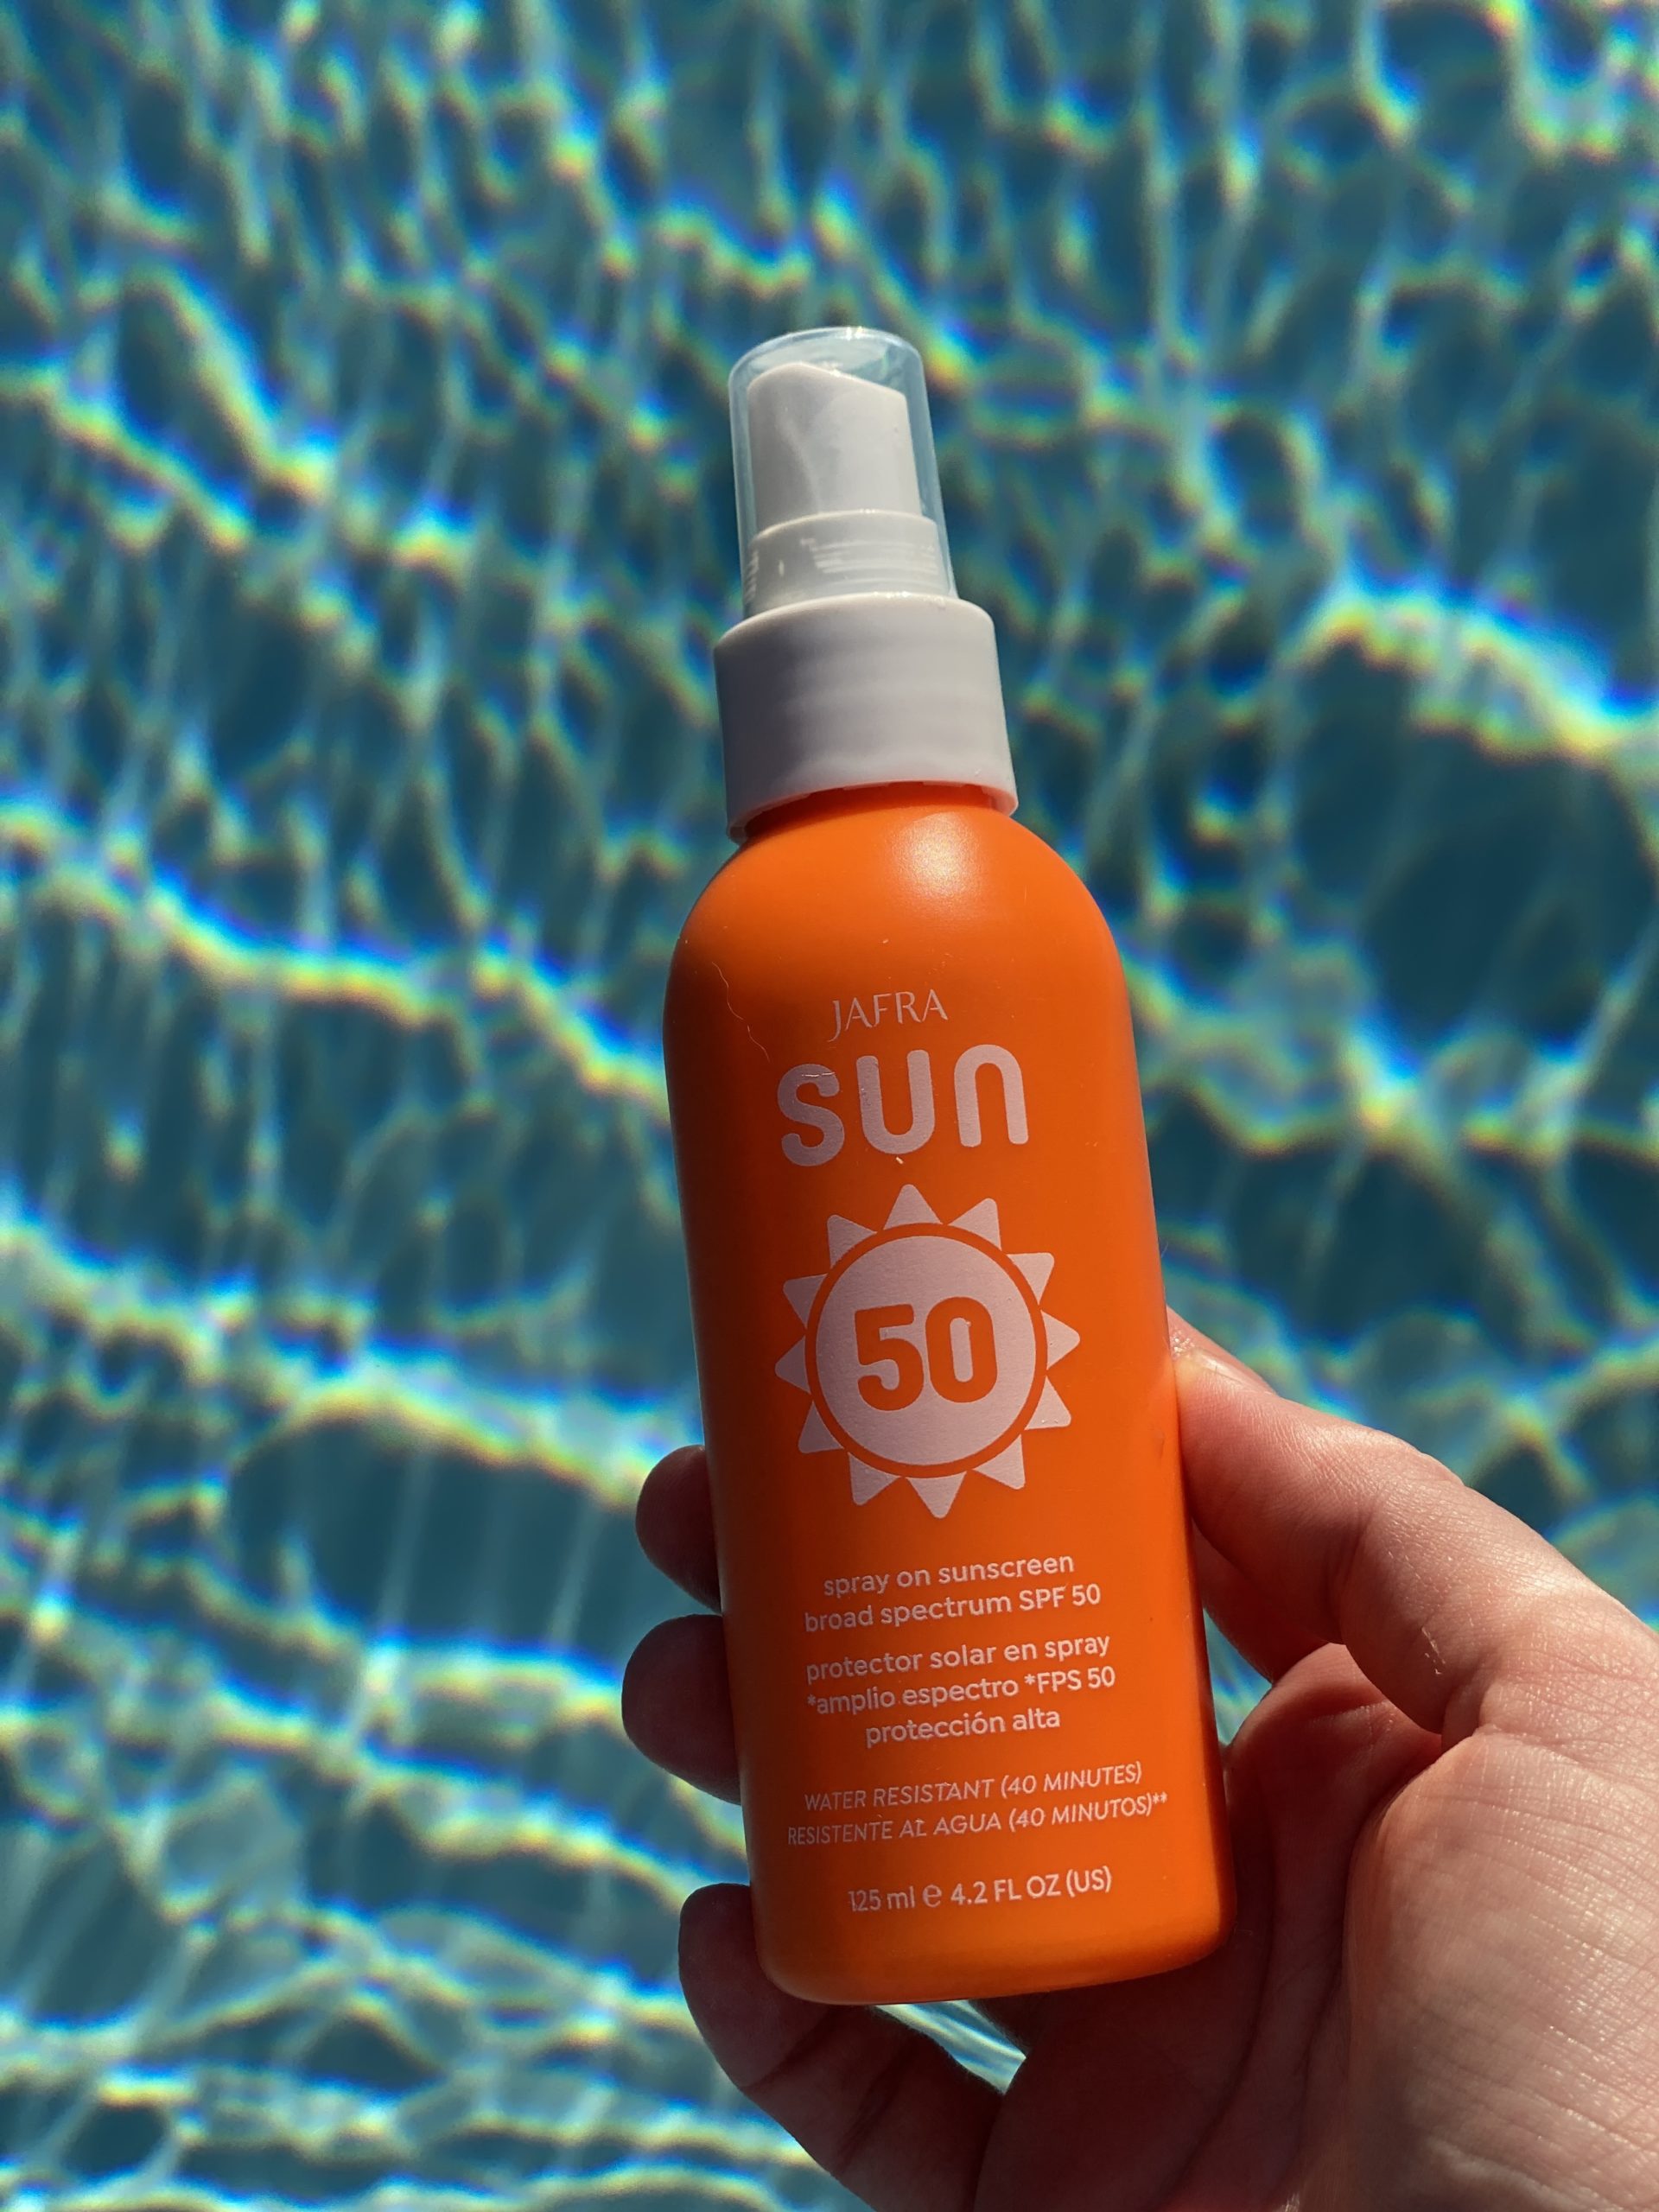 Jafra spray sunscreen SPF Essentials for Summer